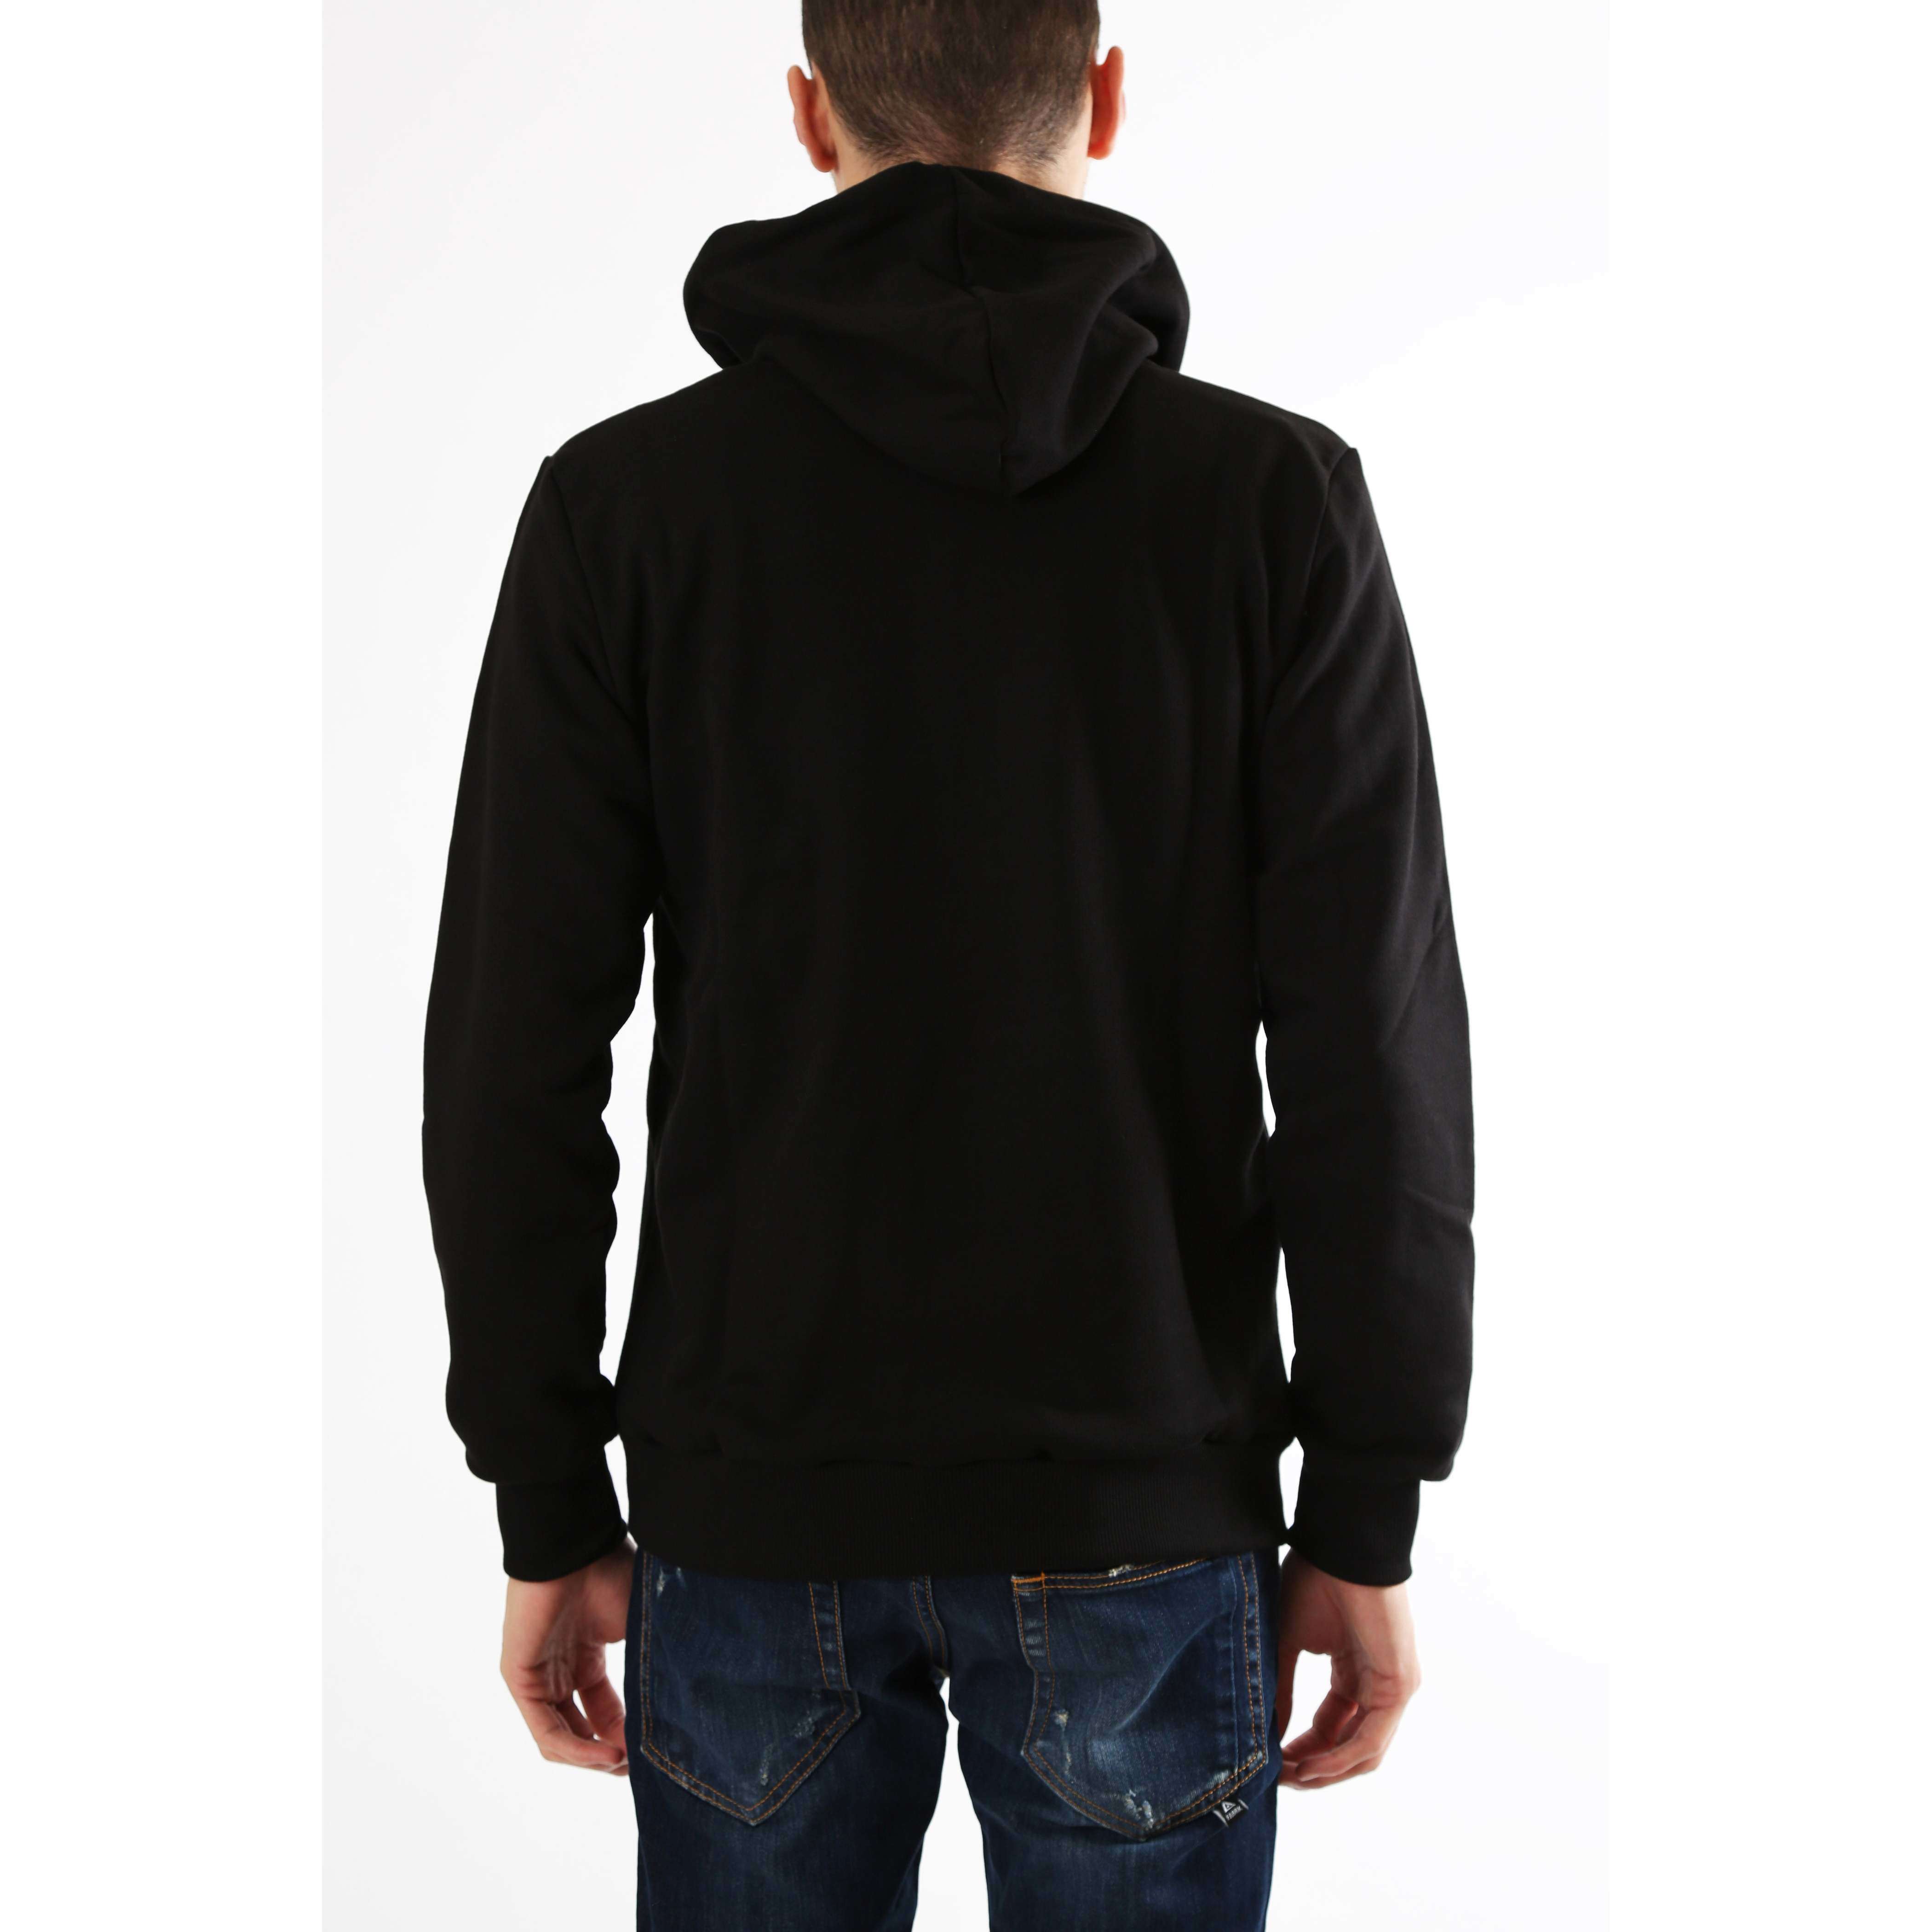 Fabrik London Uomo Felpa Manica Lunga Con Cappuccio Sweatshirt Colour Black